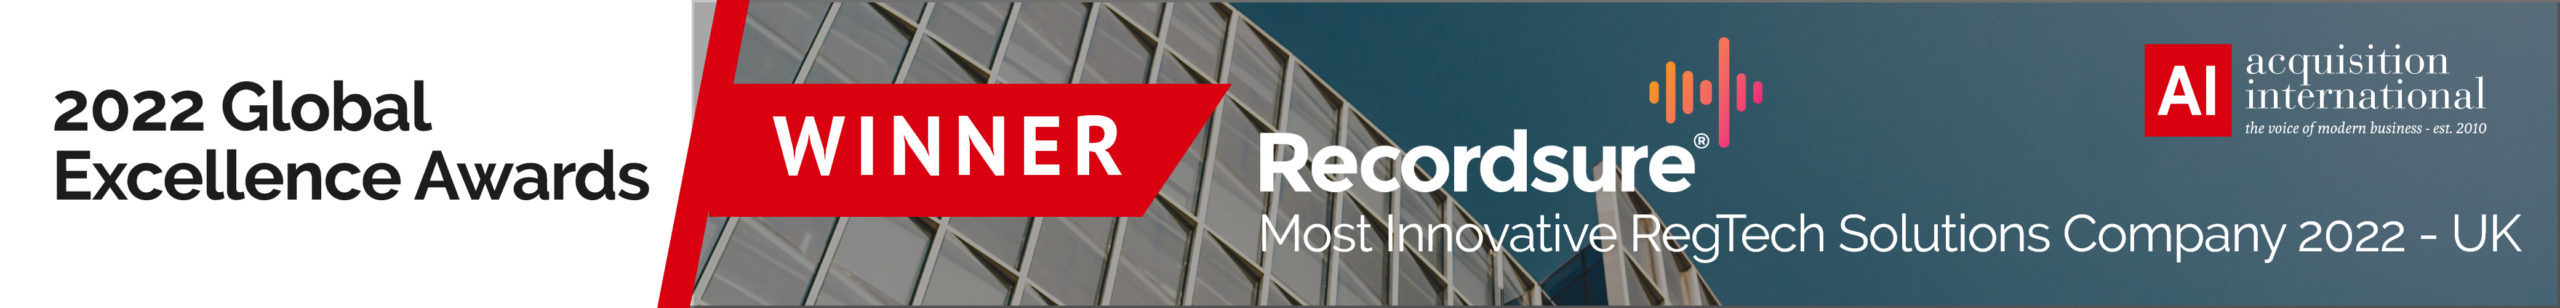 Recordsure 2022 Global Excellence Awards winner most innovative regtech solutions company 2022 UK